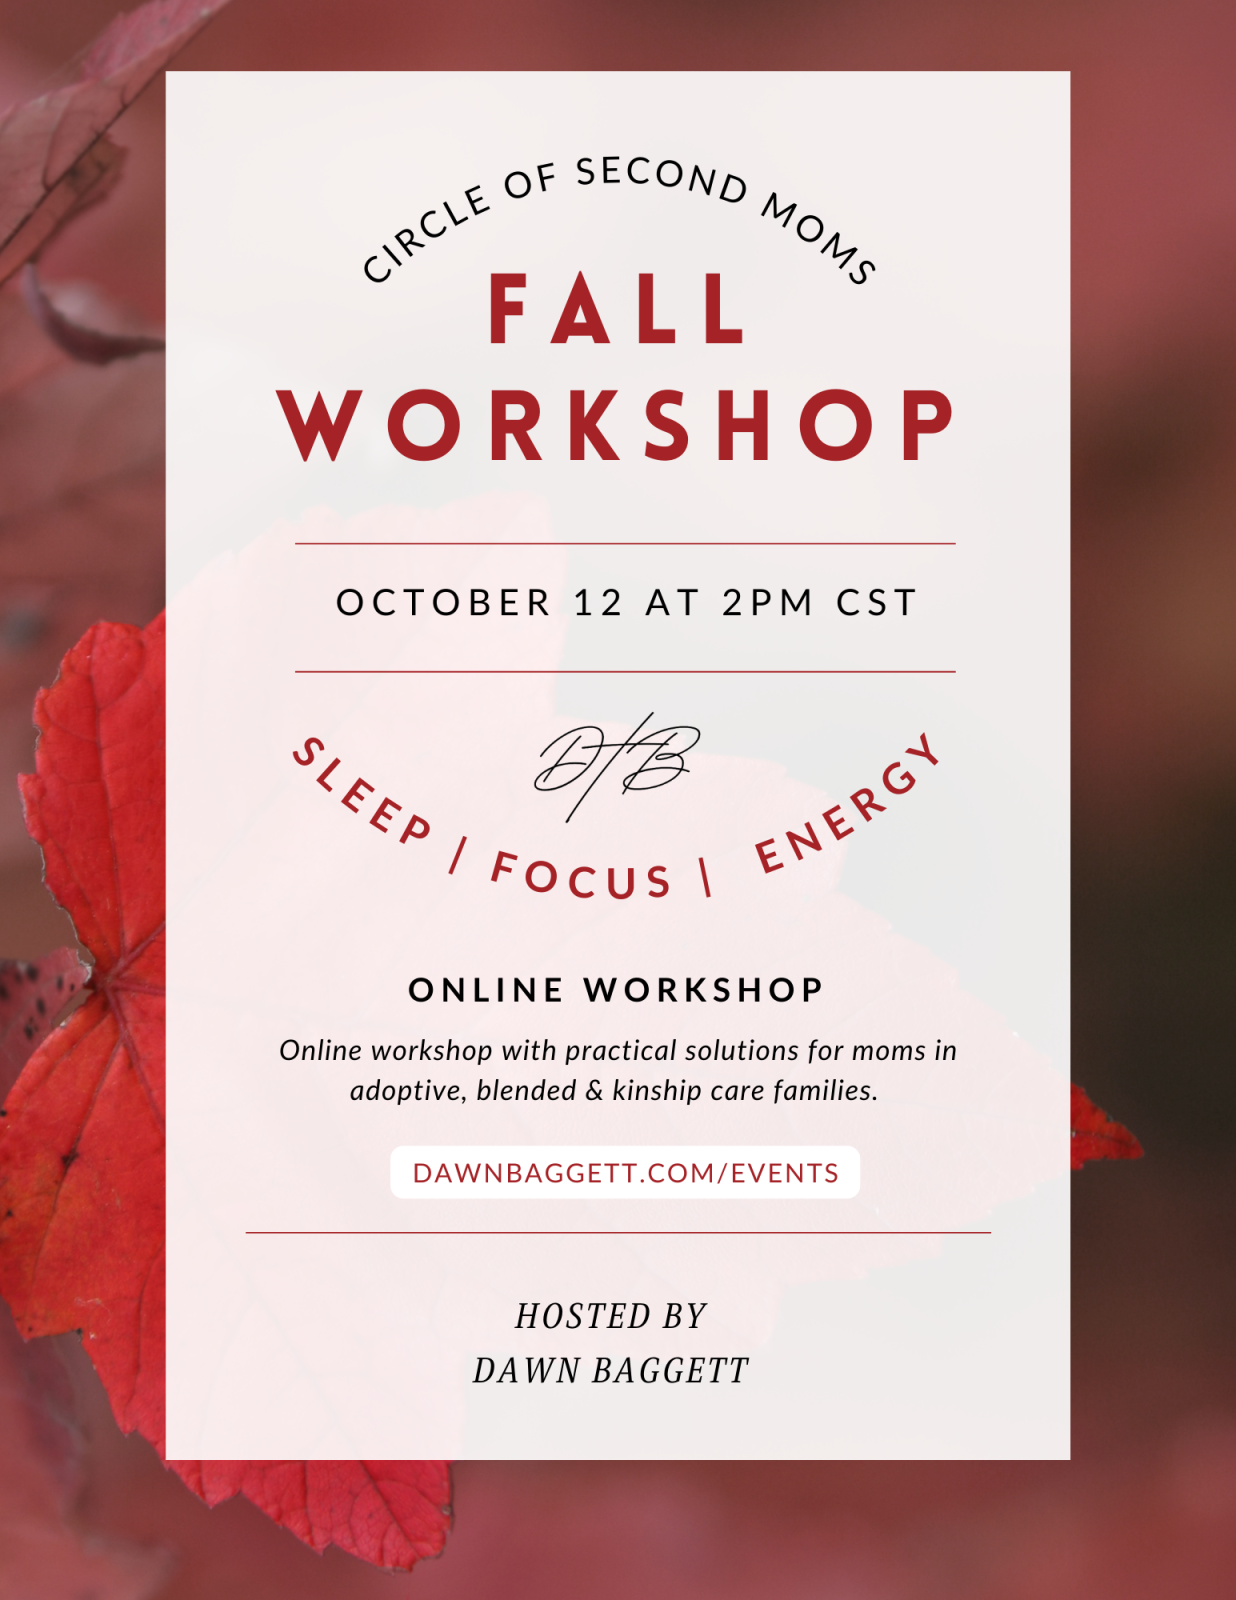 Fall Workshop - Sleep, Focus & Energy